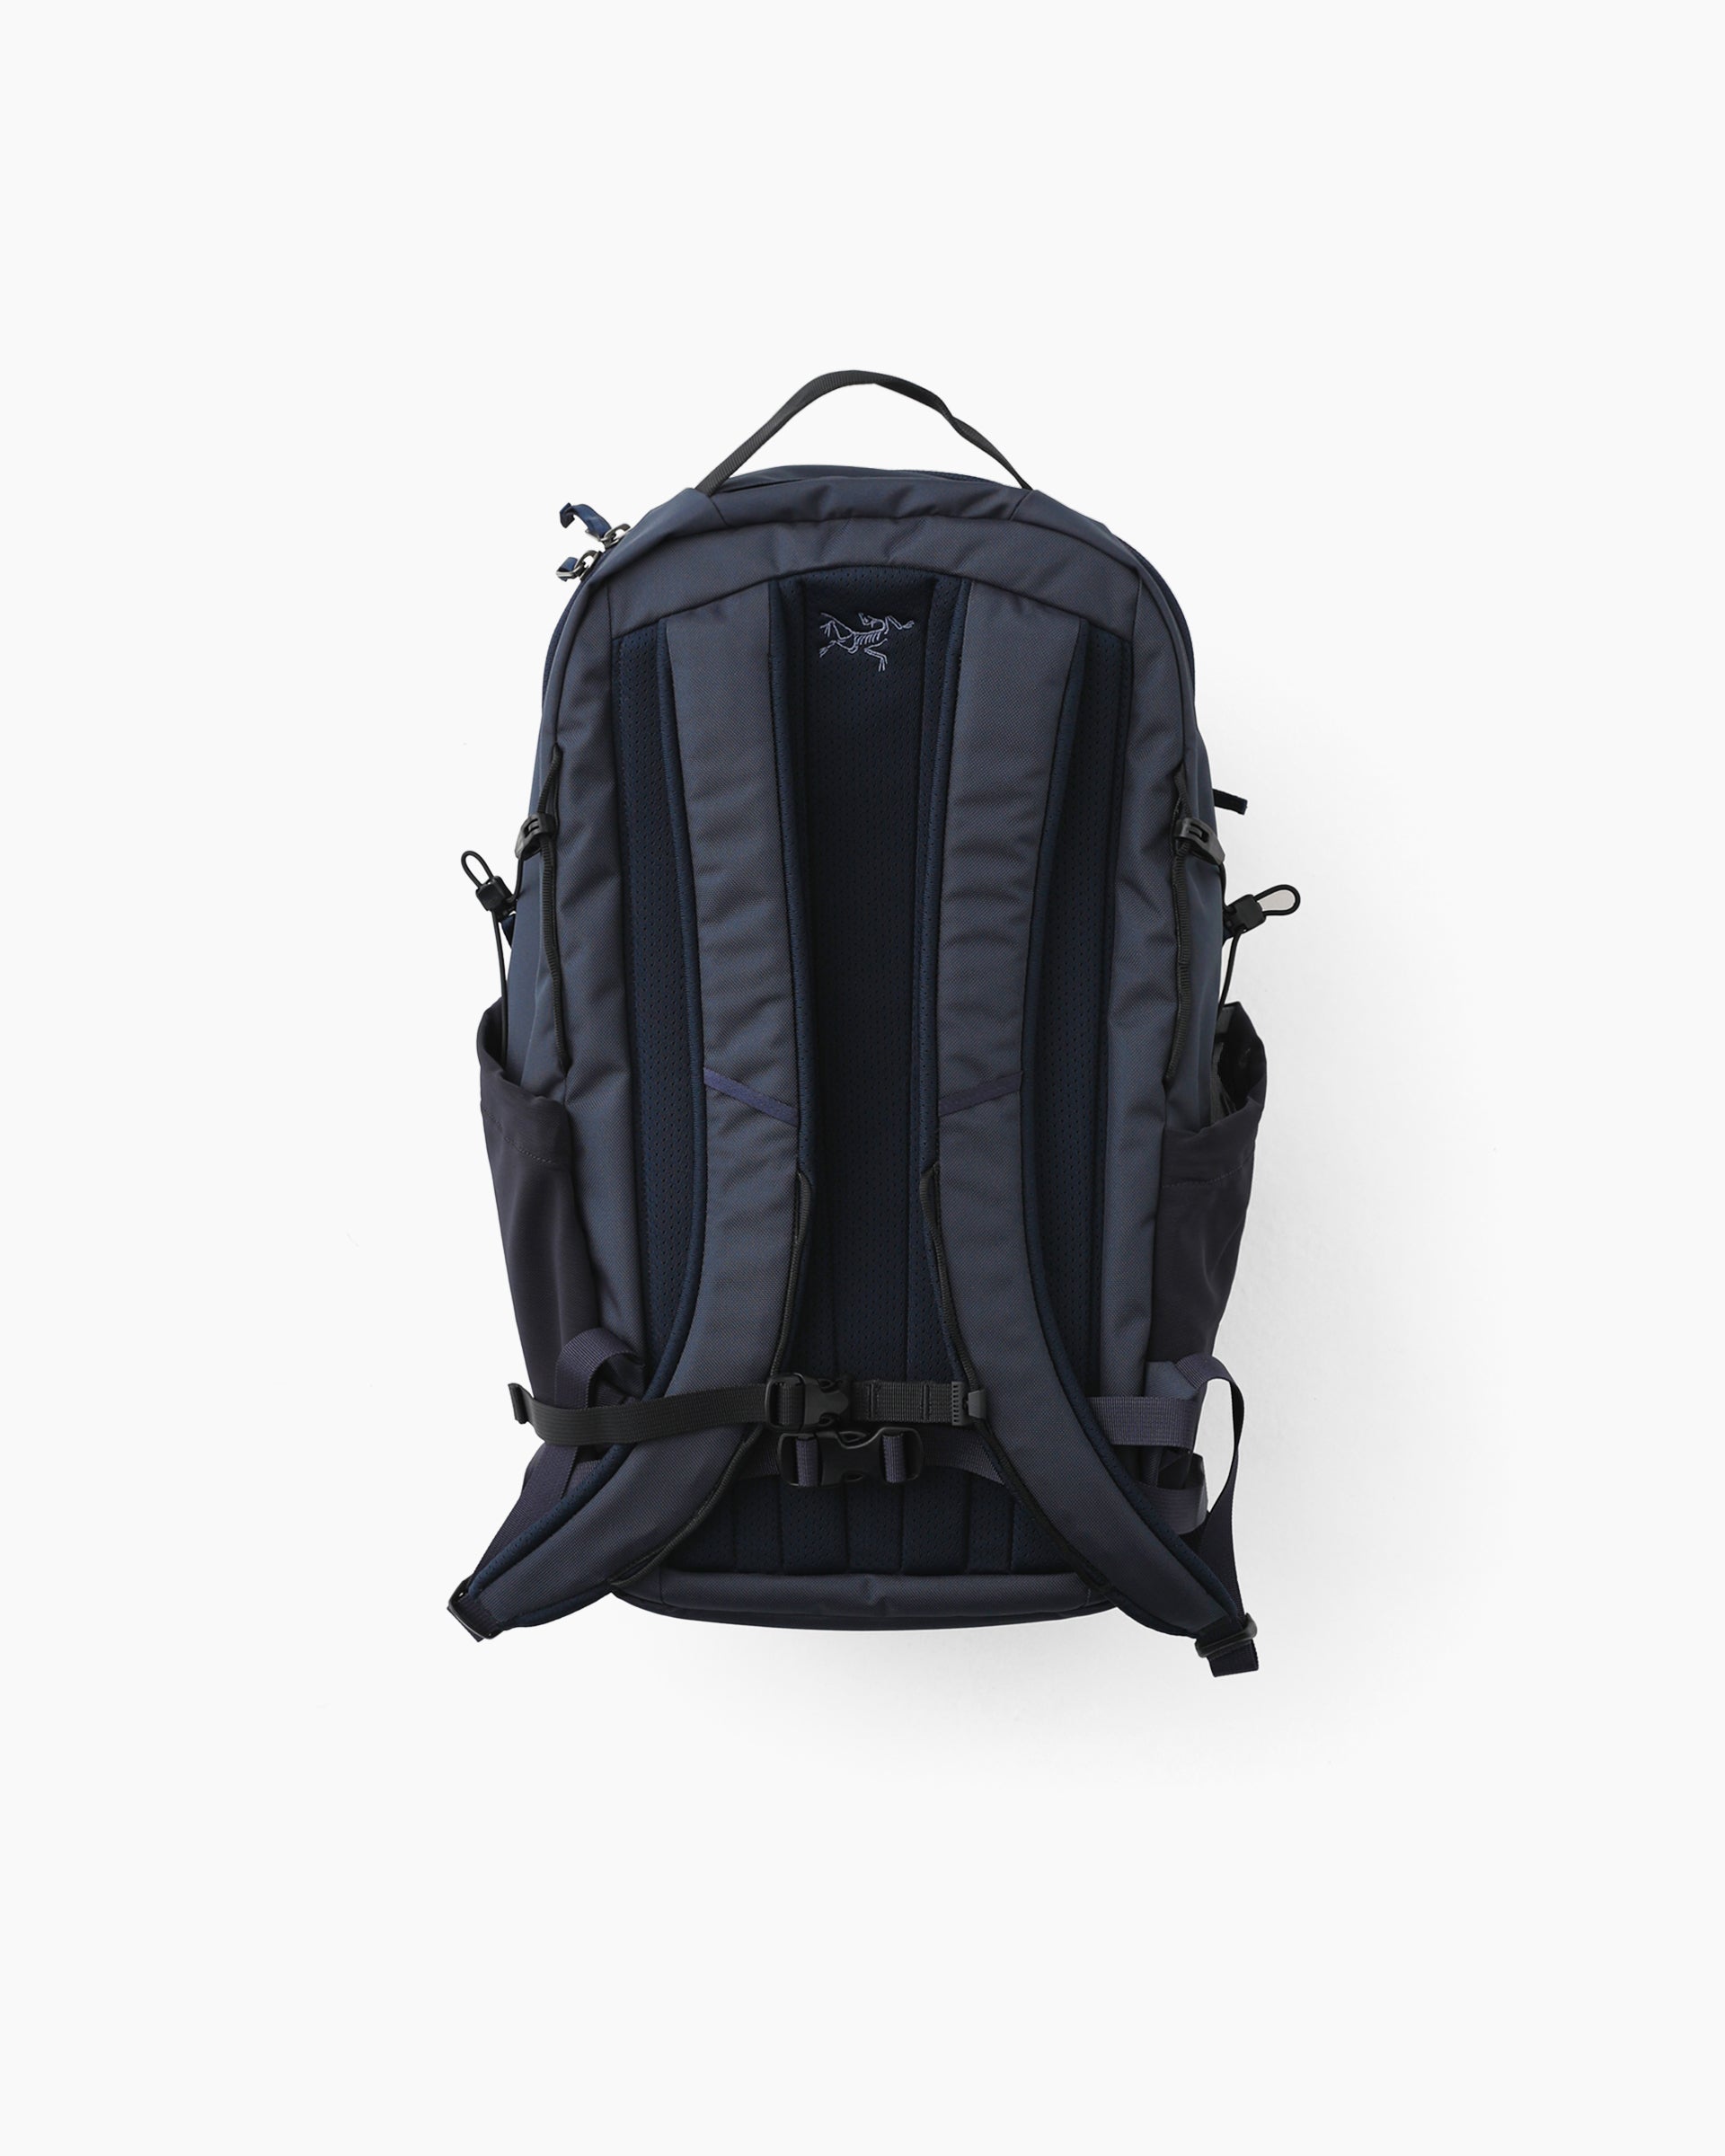 Mantis 26 Backpack Black Sapphire